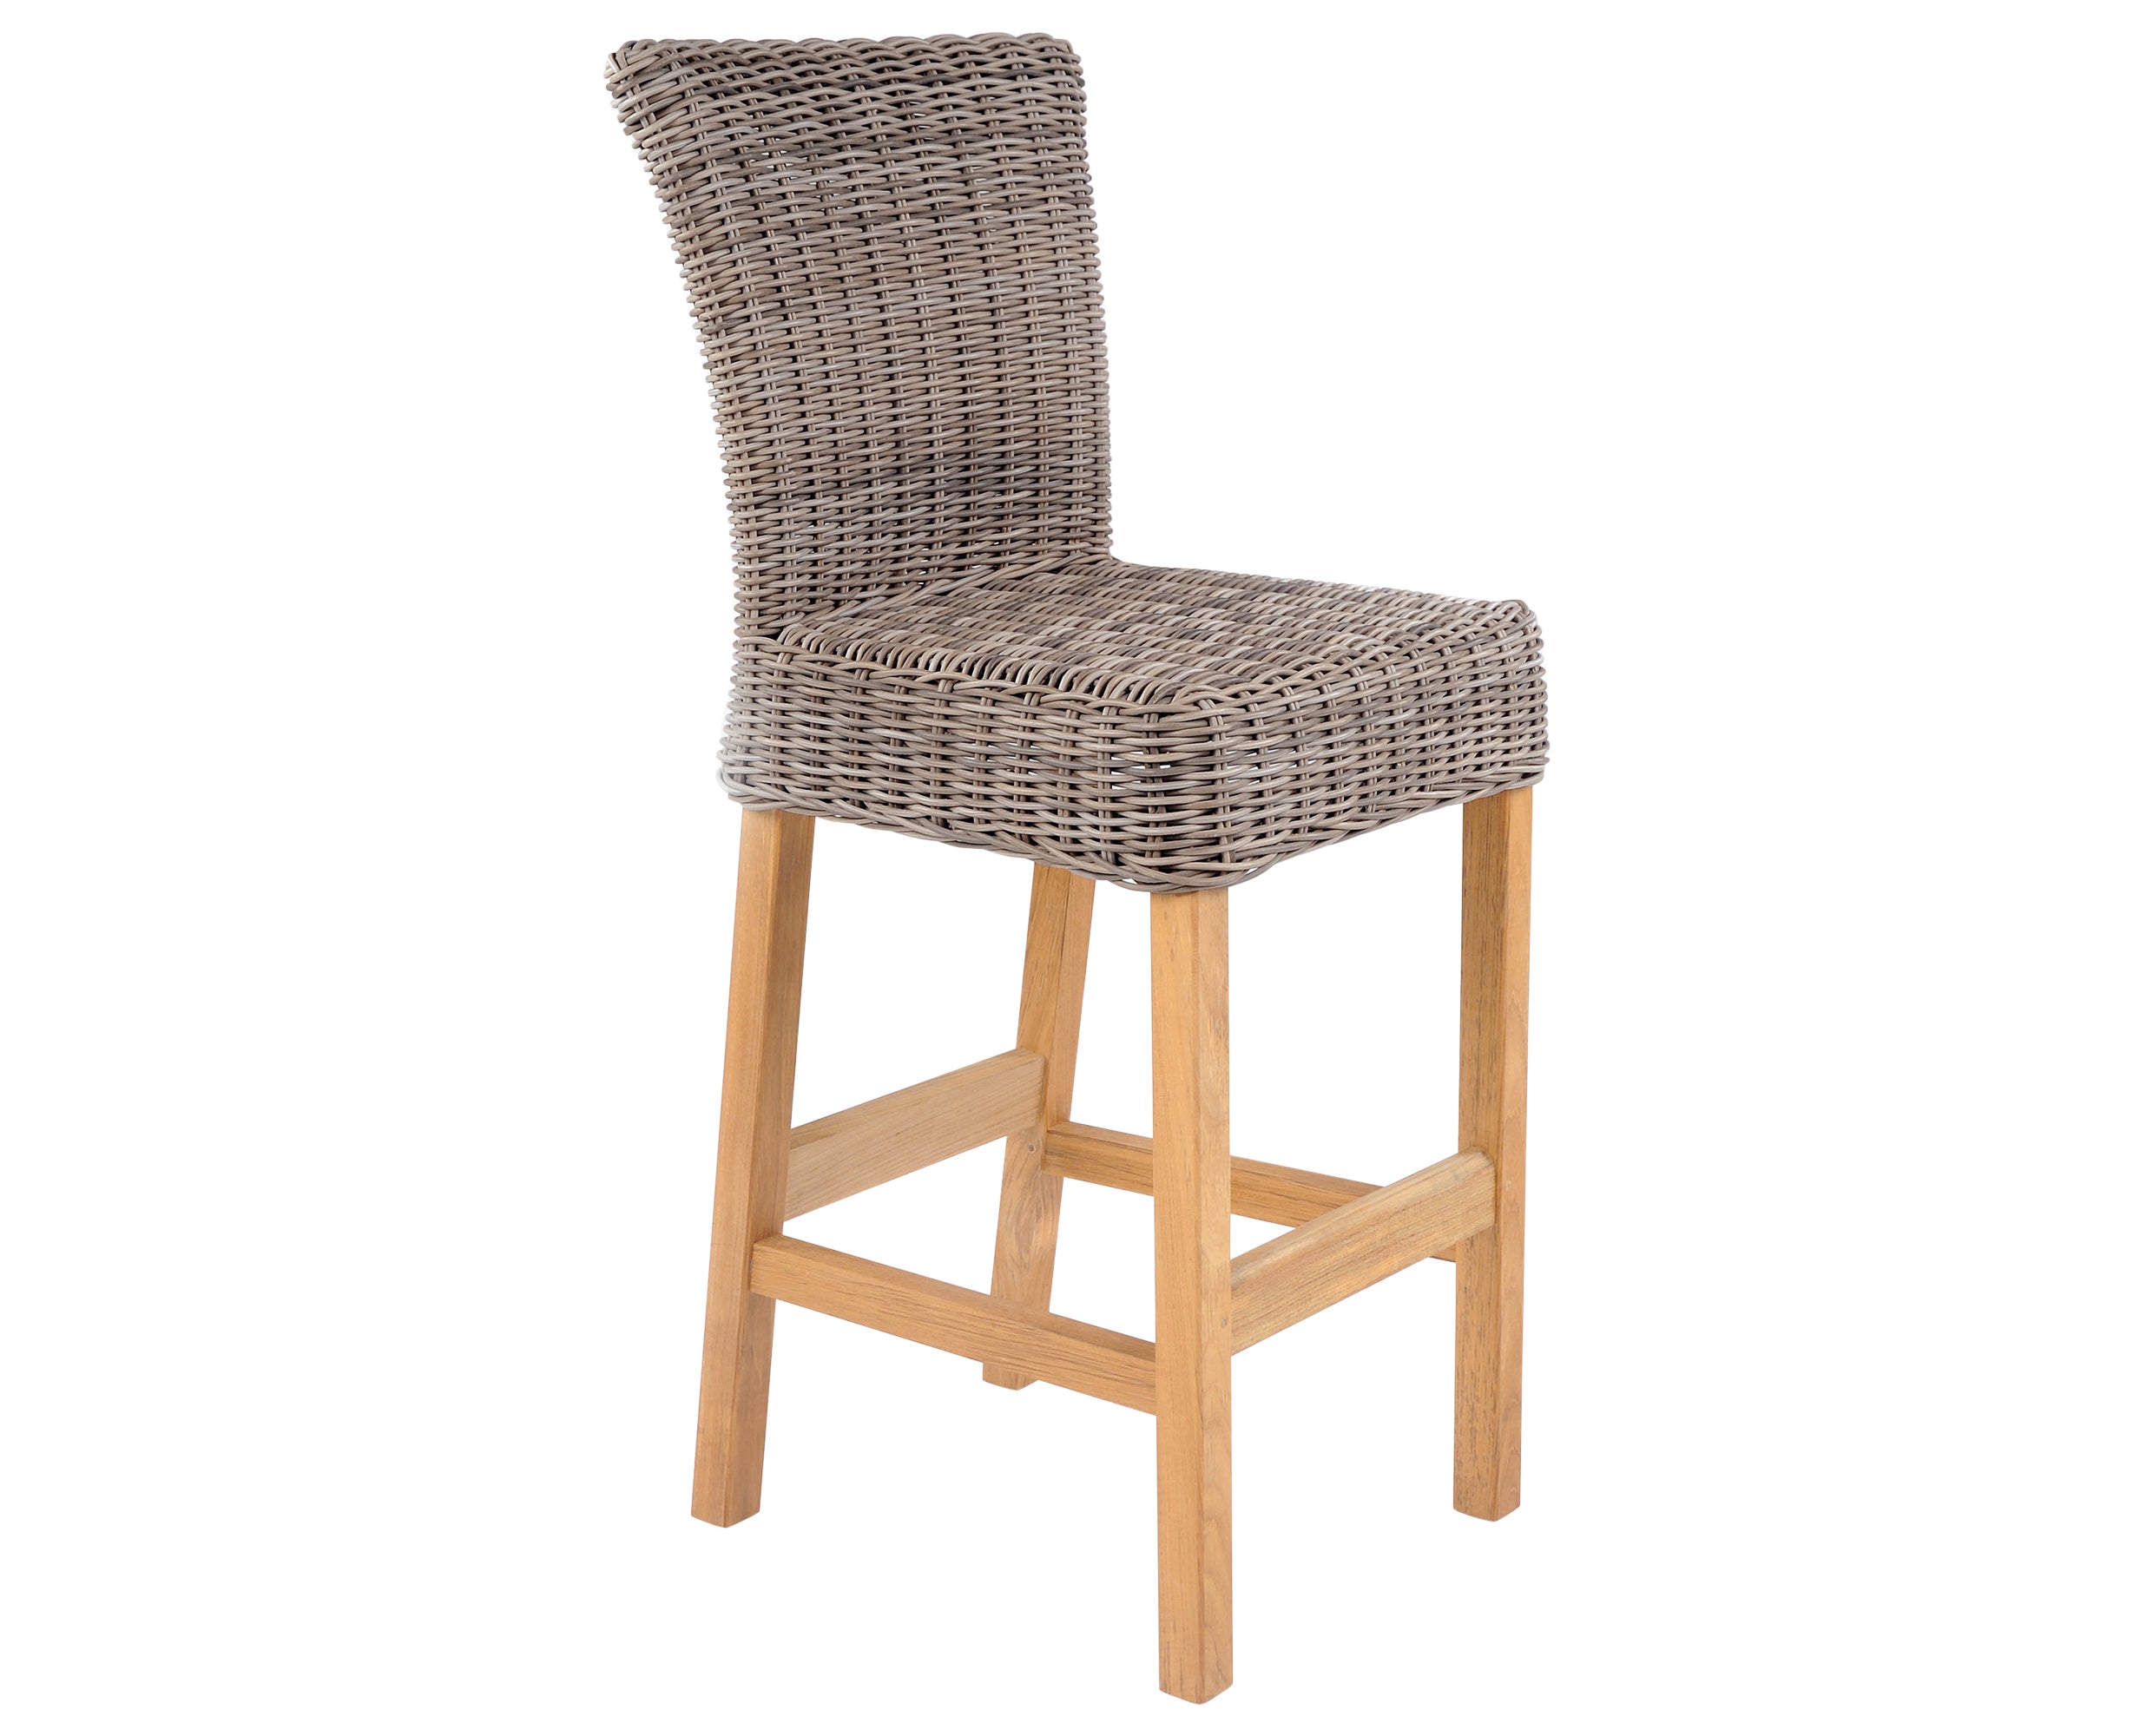 Bar Chair | Kingsley Bate Sag Harbor Collection | Valley Ridge Furniture